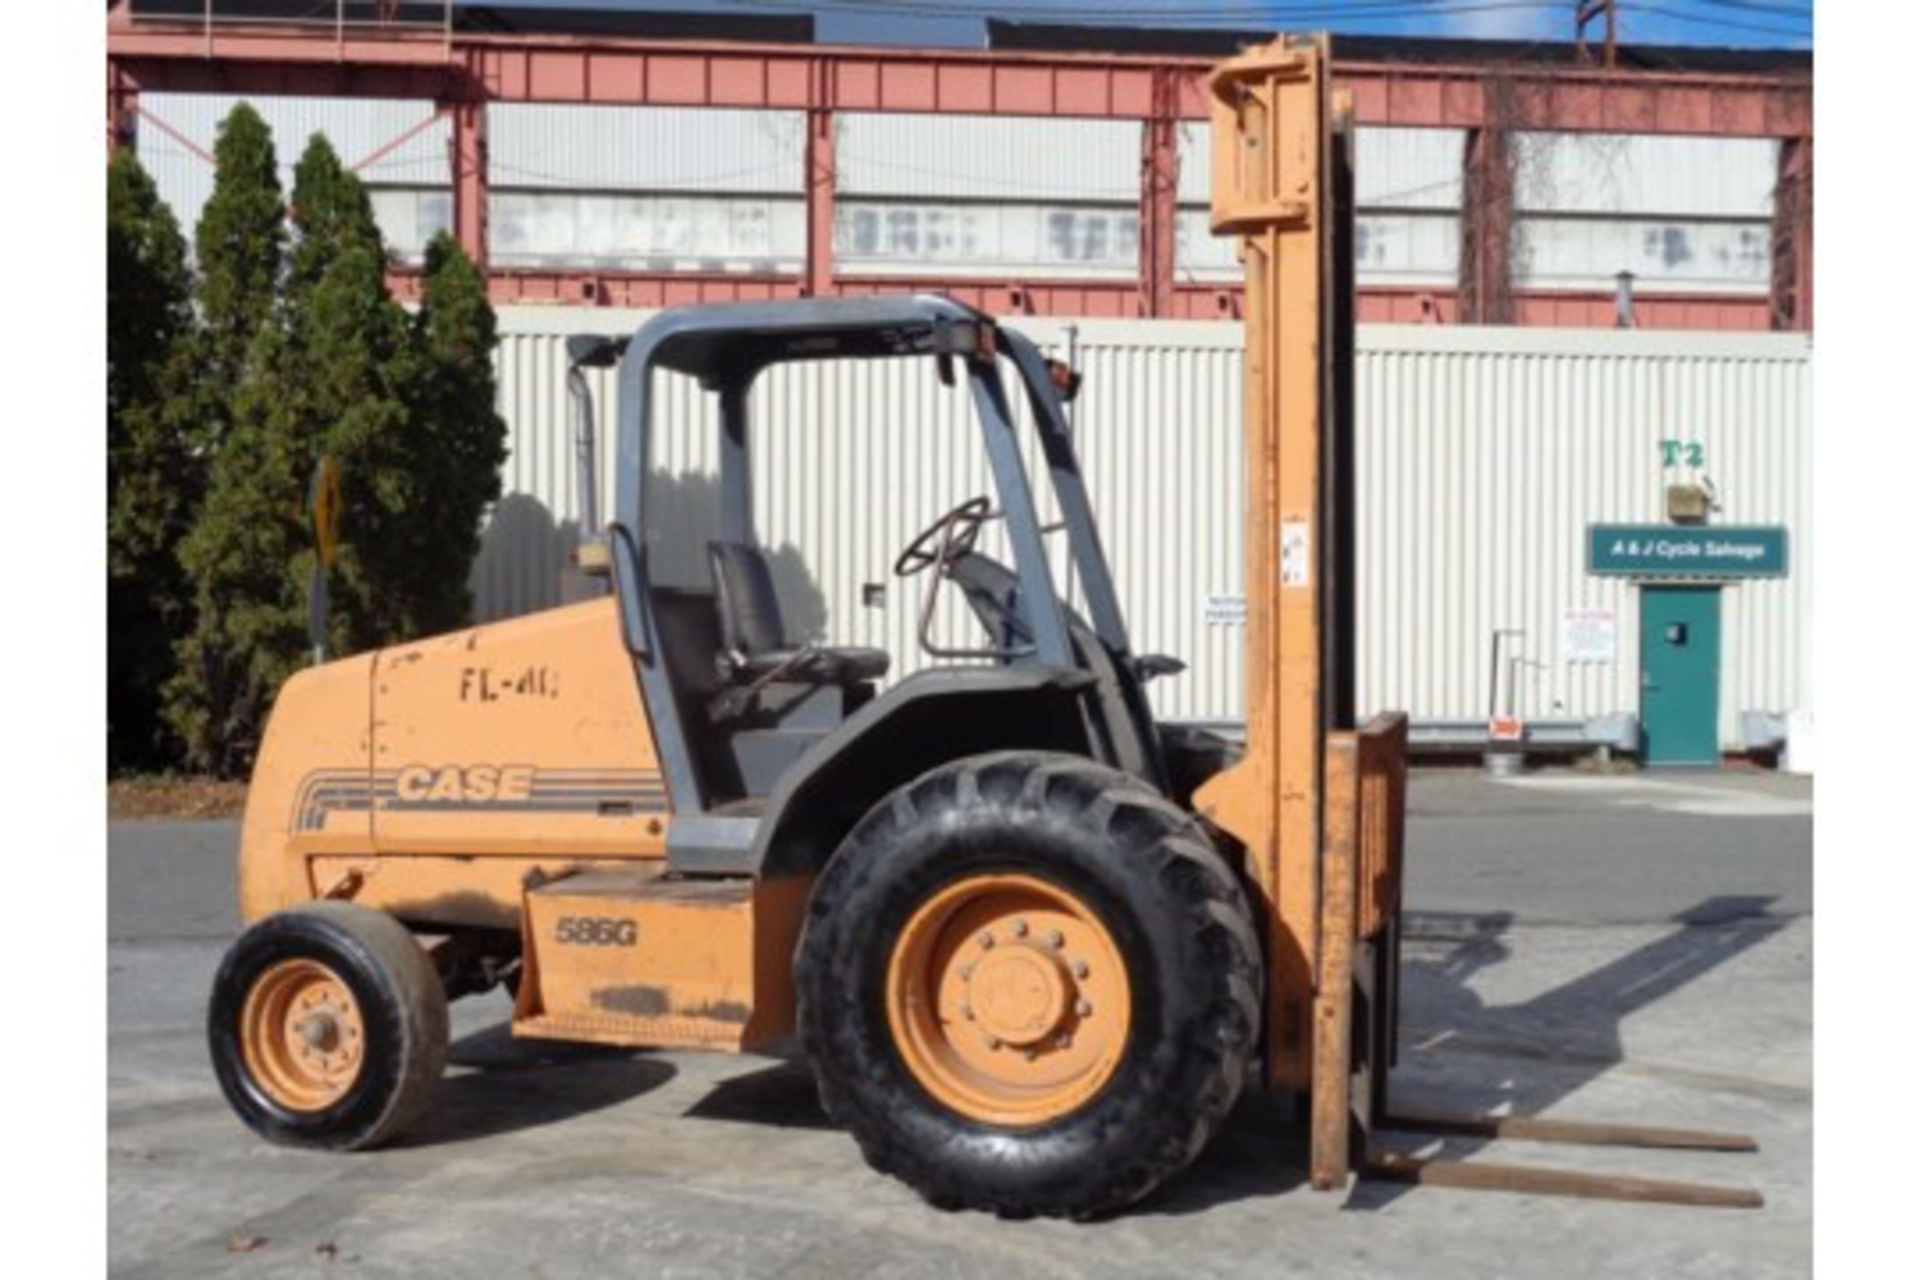 Case 580G 6000lb Rough Terrain Forklift - Image 3 of 20